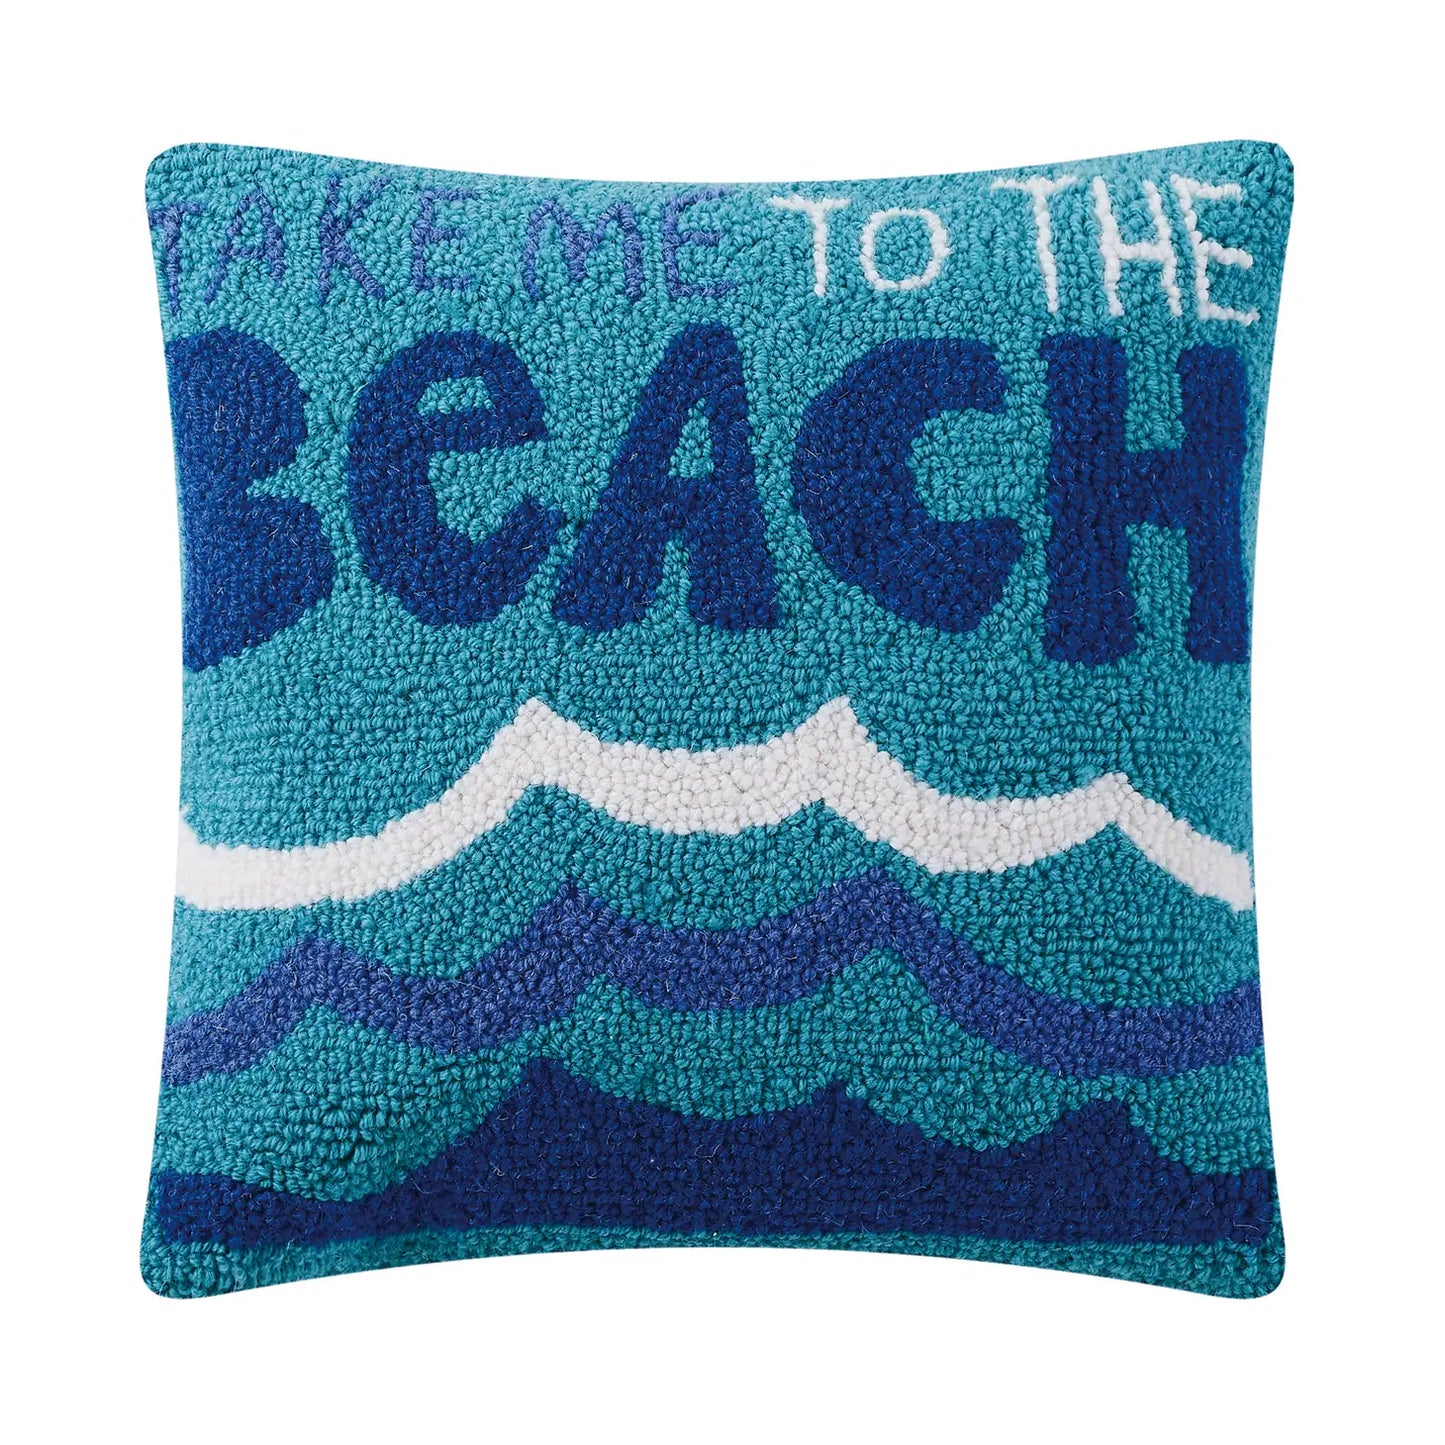 Take Me To the Beach Hook Pillow